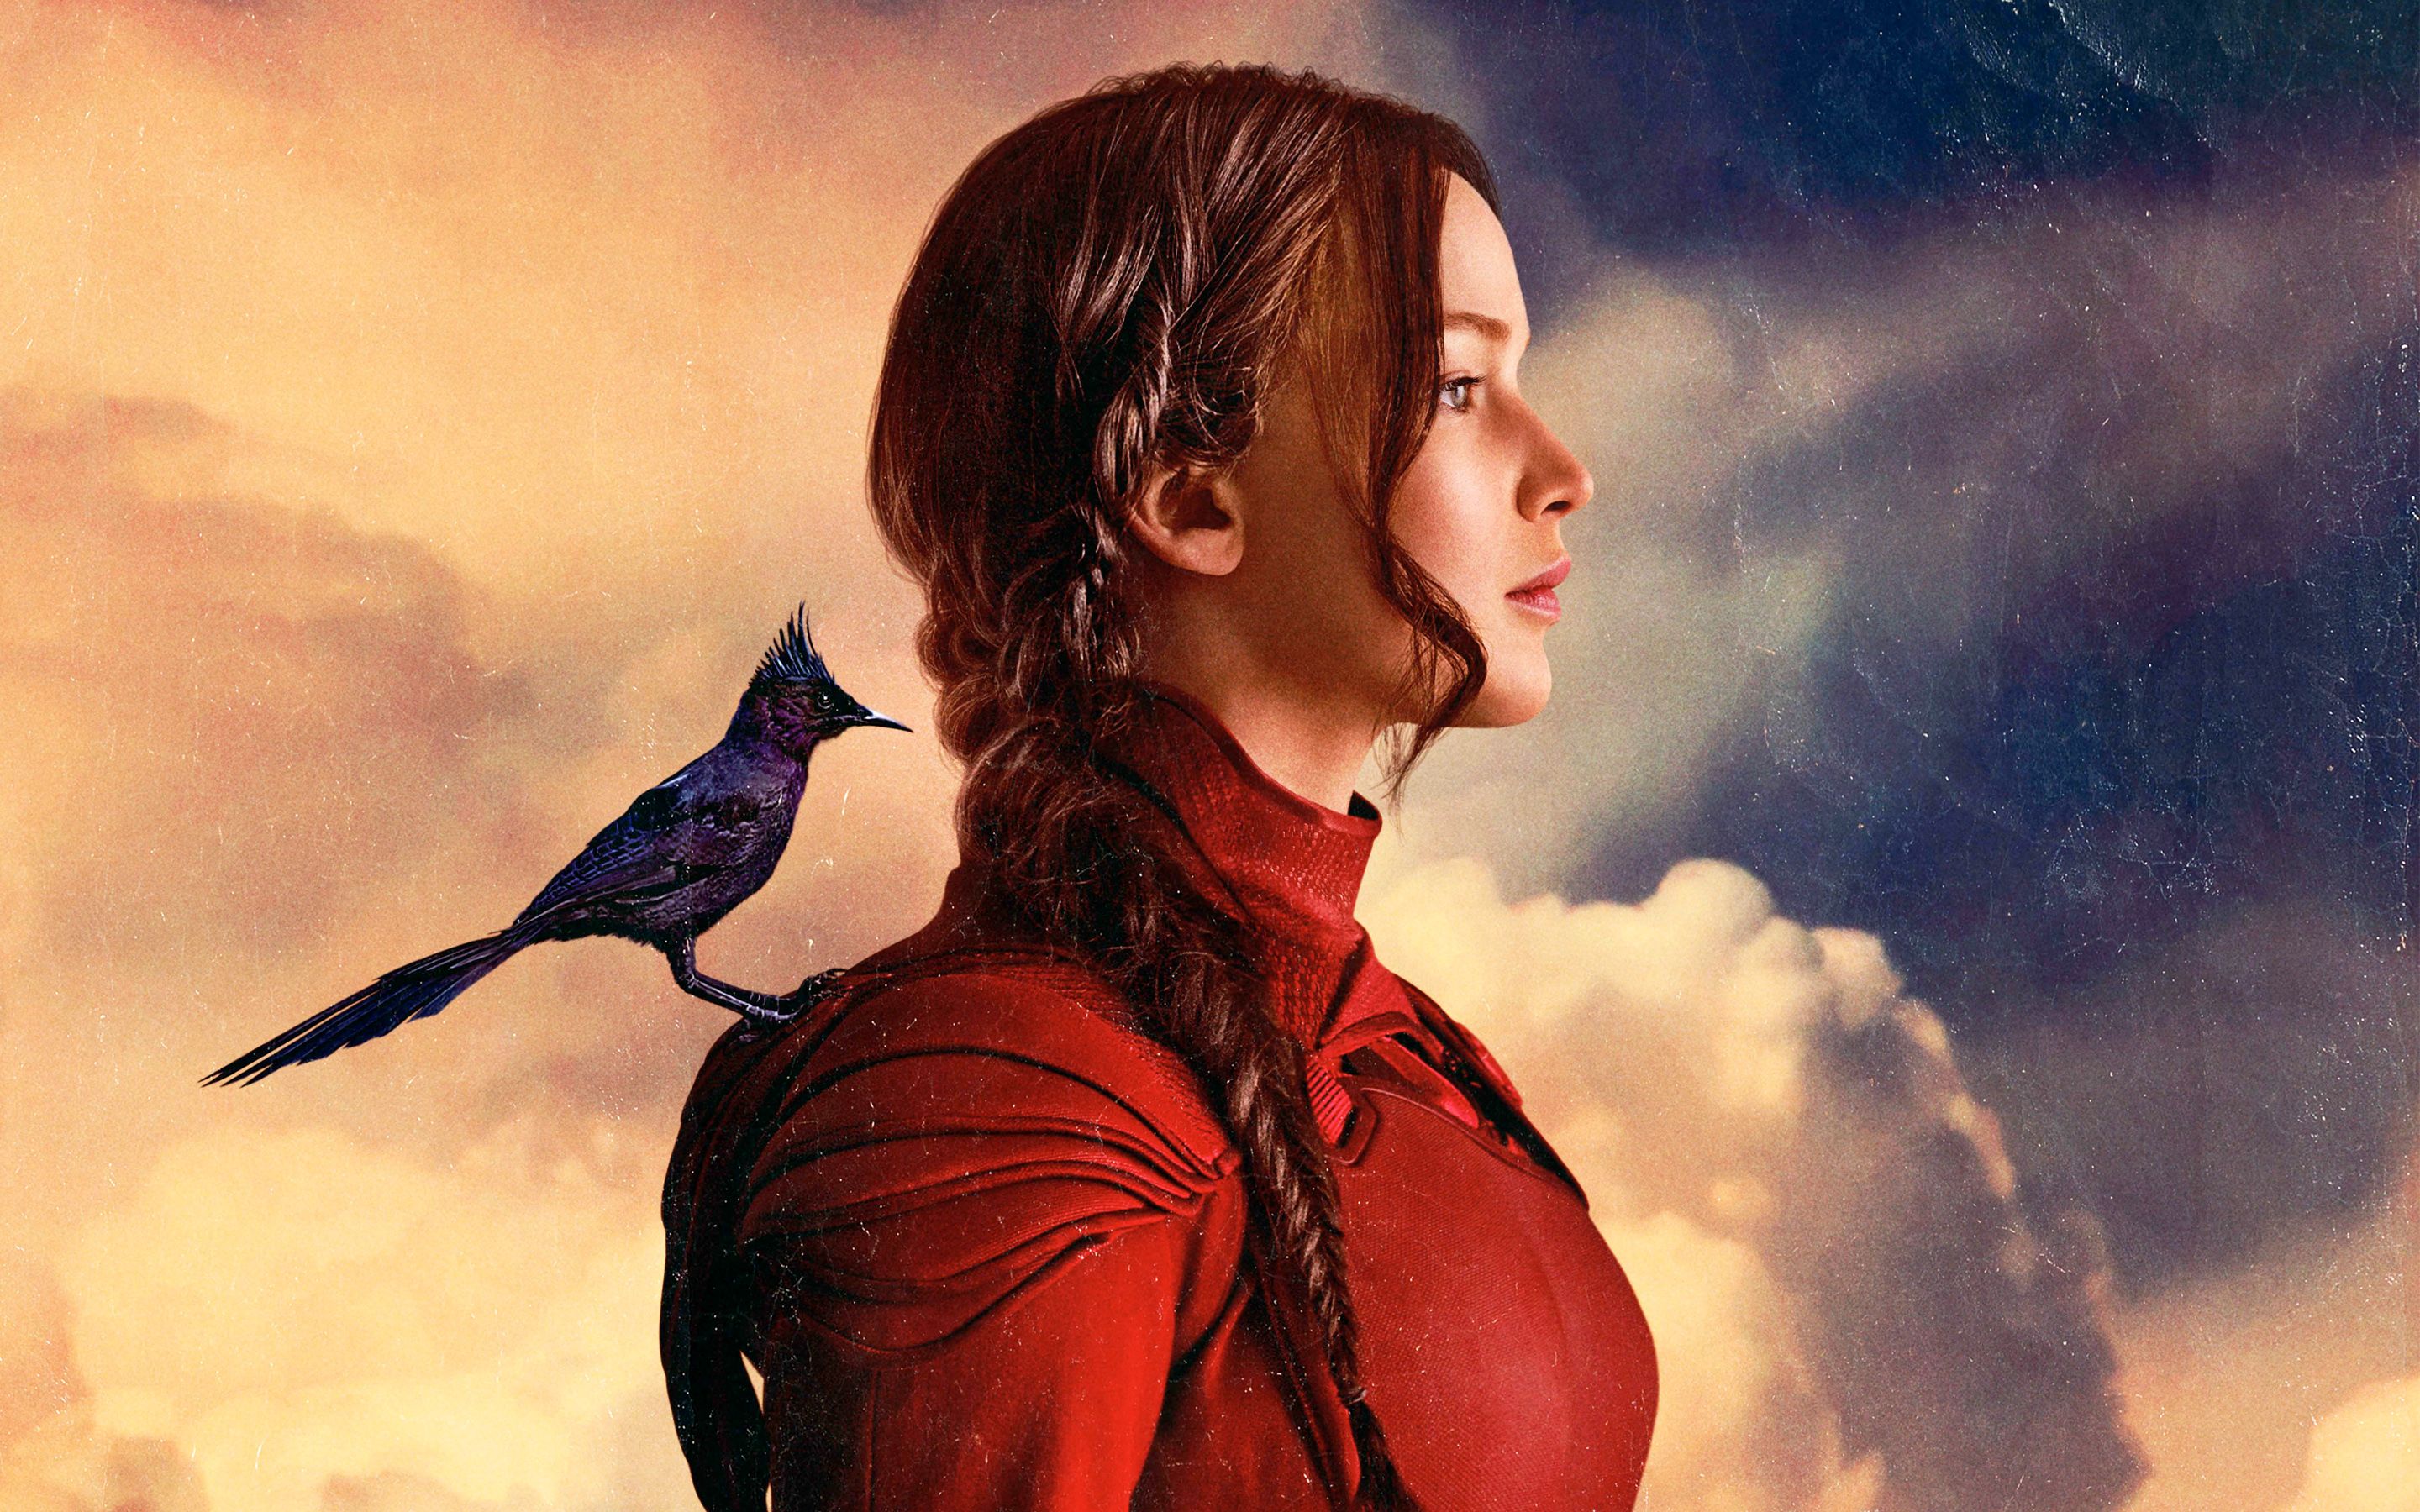 Katniss 4K wallpaper for your desktop or mobile screen free